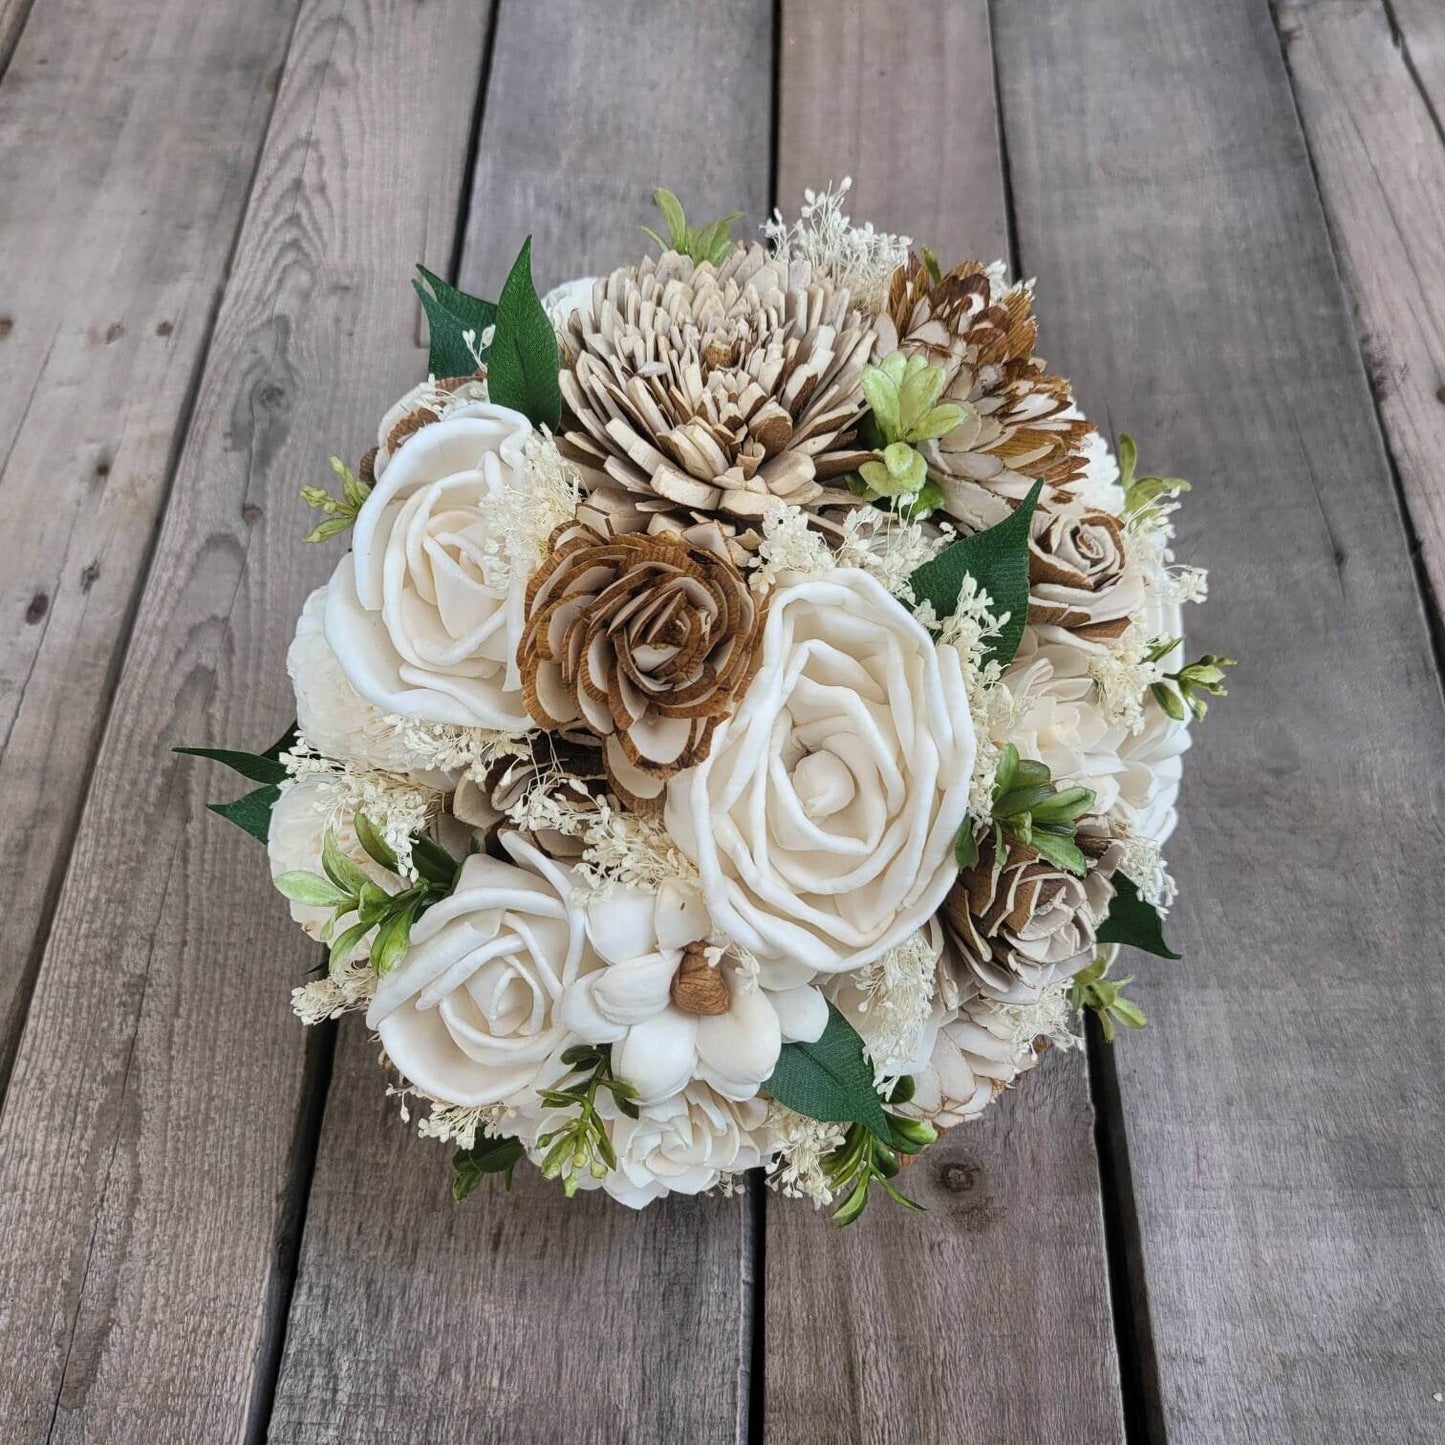 Wood Flower Bridal Bouquet, Rustic Wedding Bouquet, Natural Wooden Bride Bouquet, Sola Wood Wedding Flowers